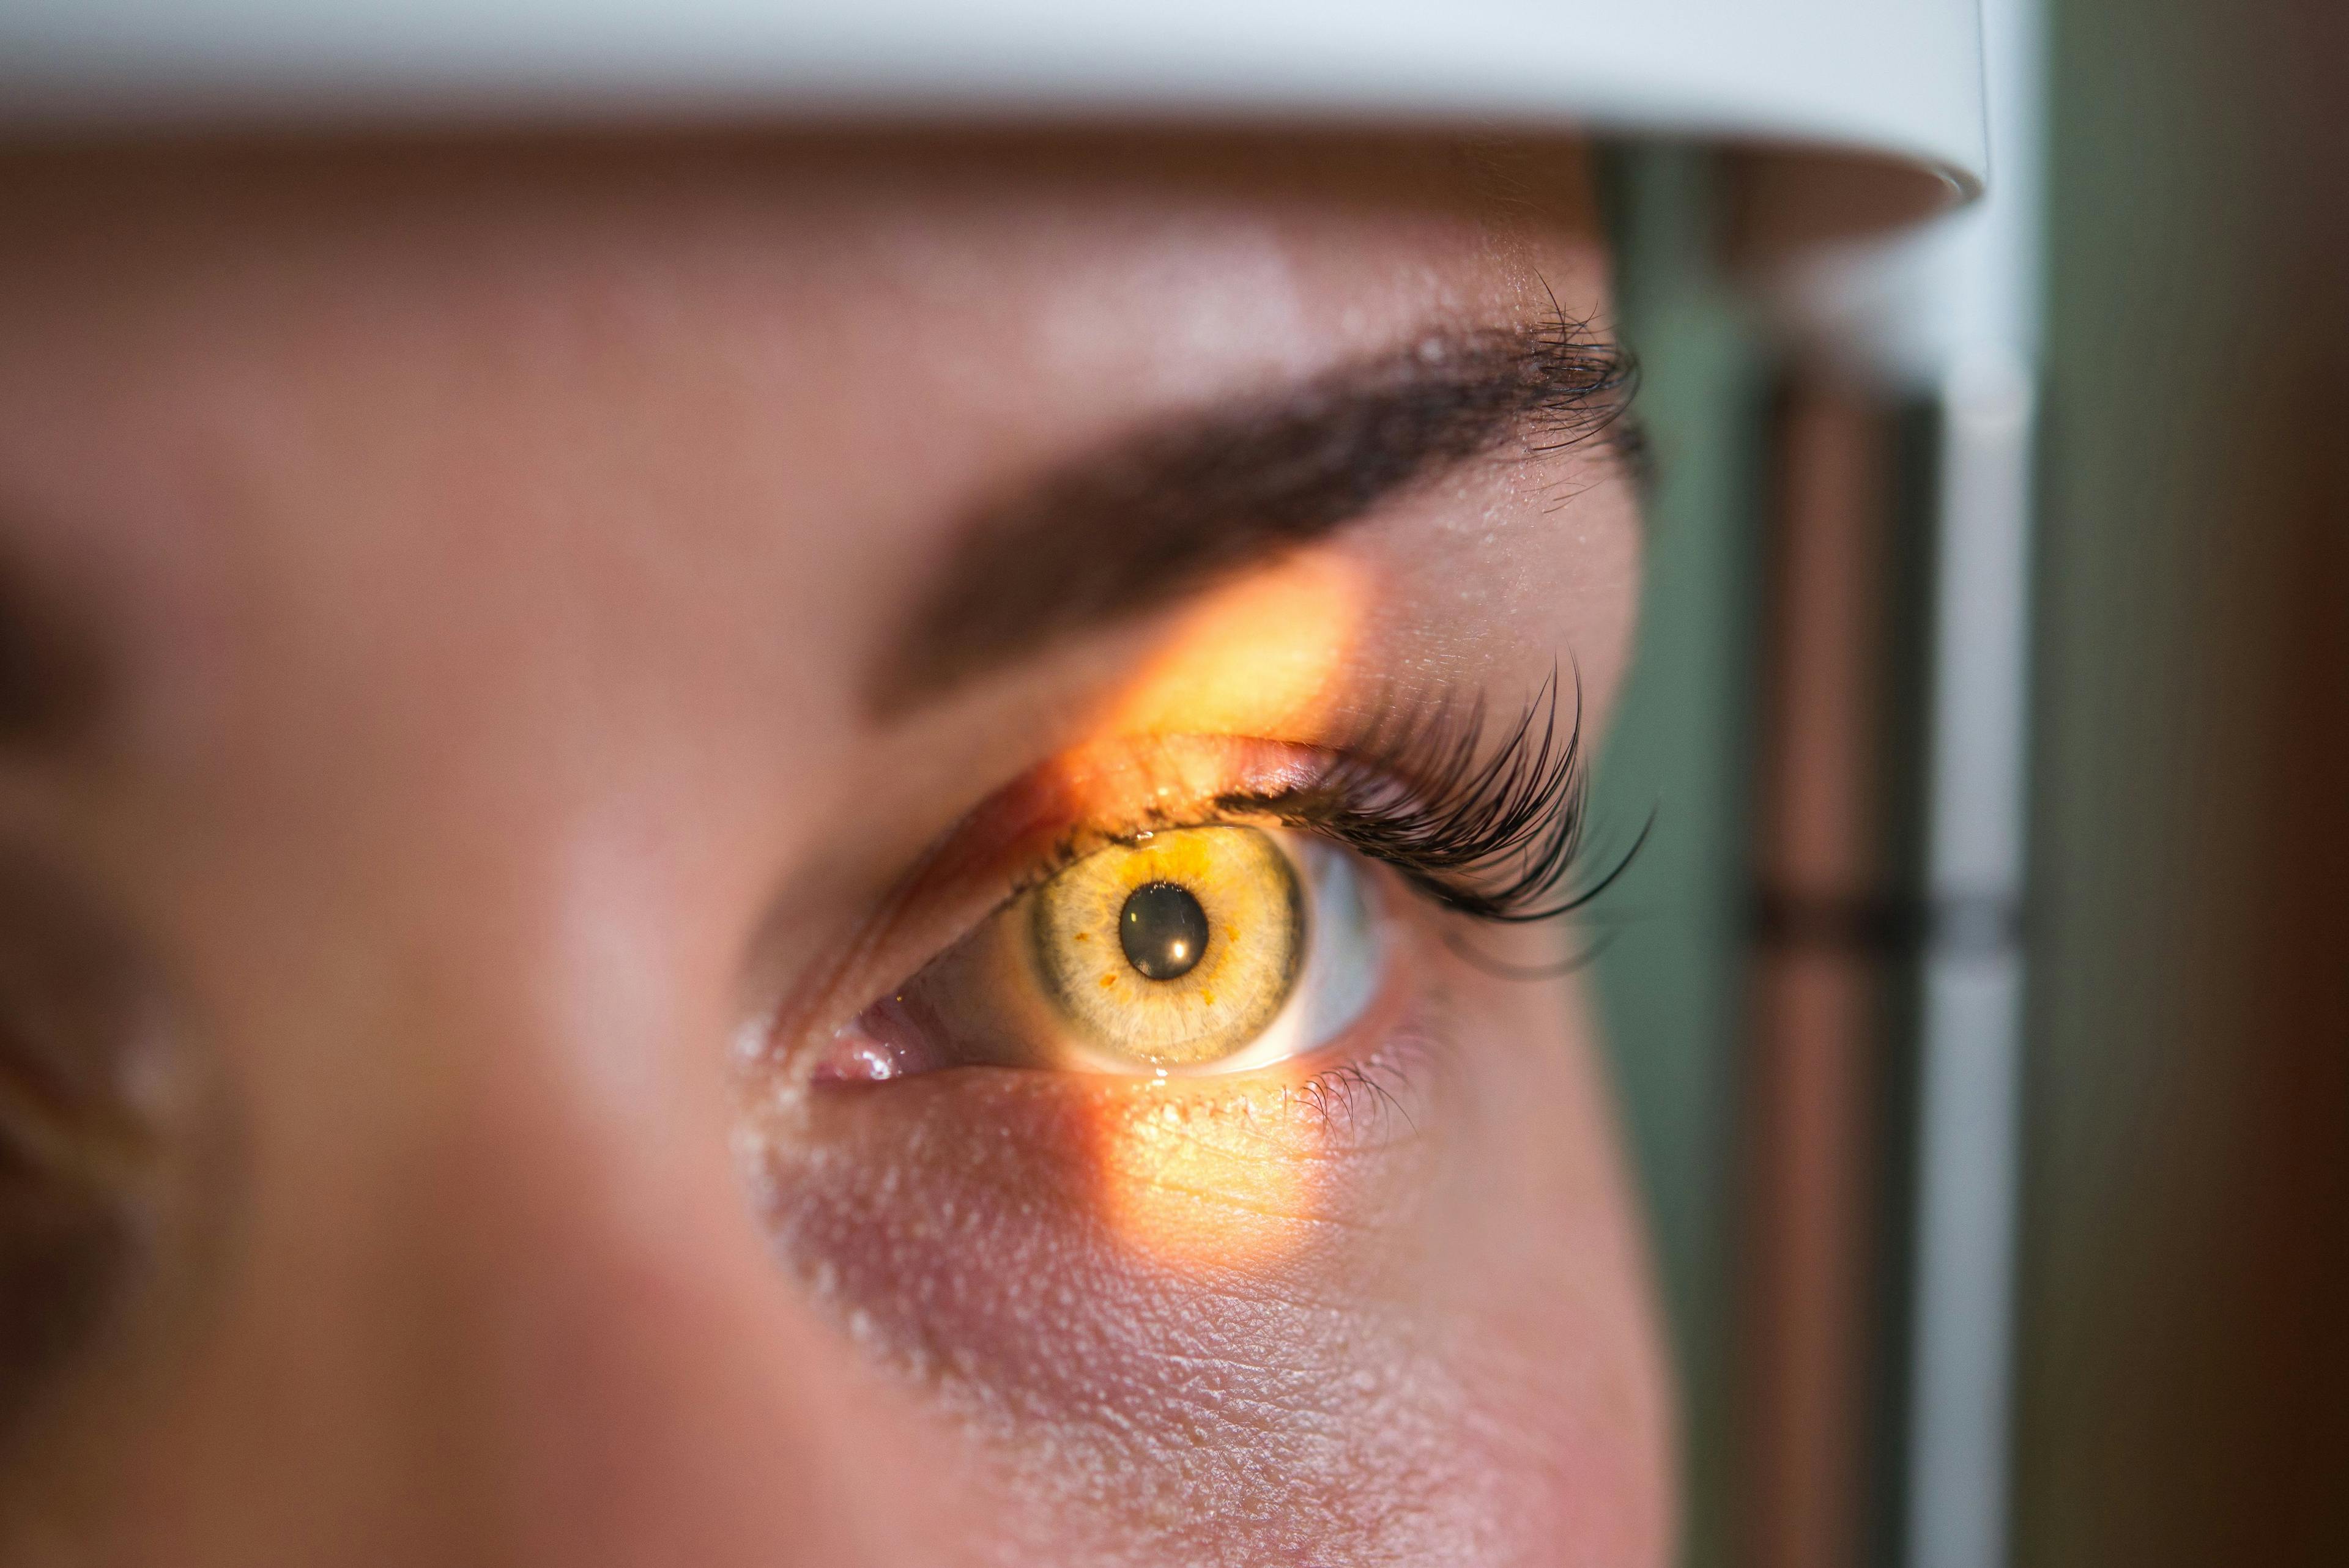 Shining light in eye during eye exam